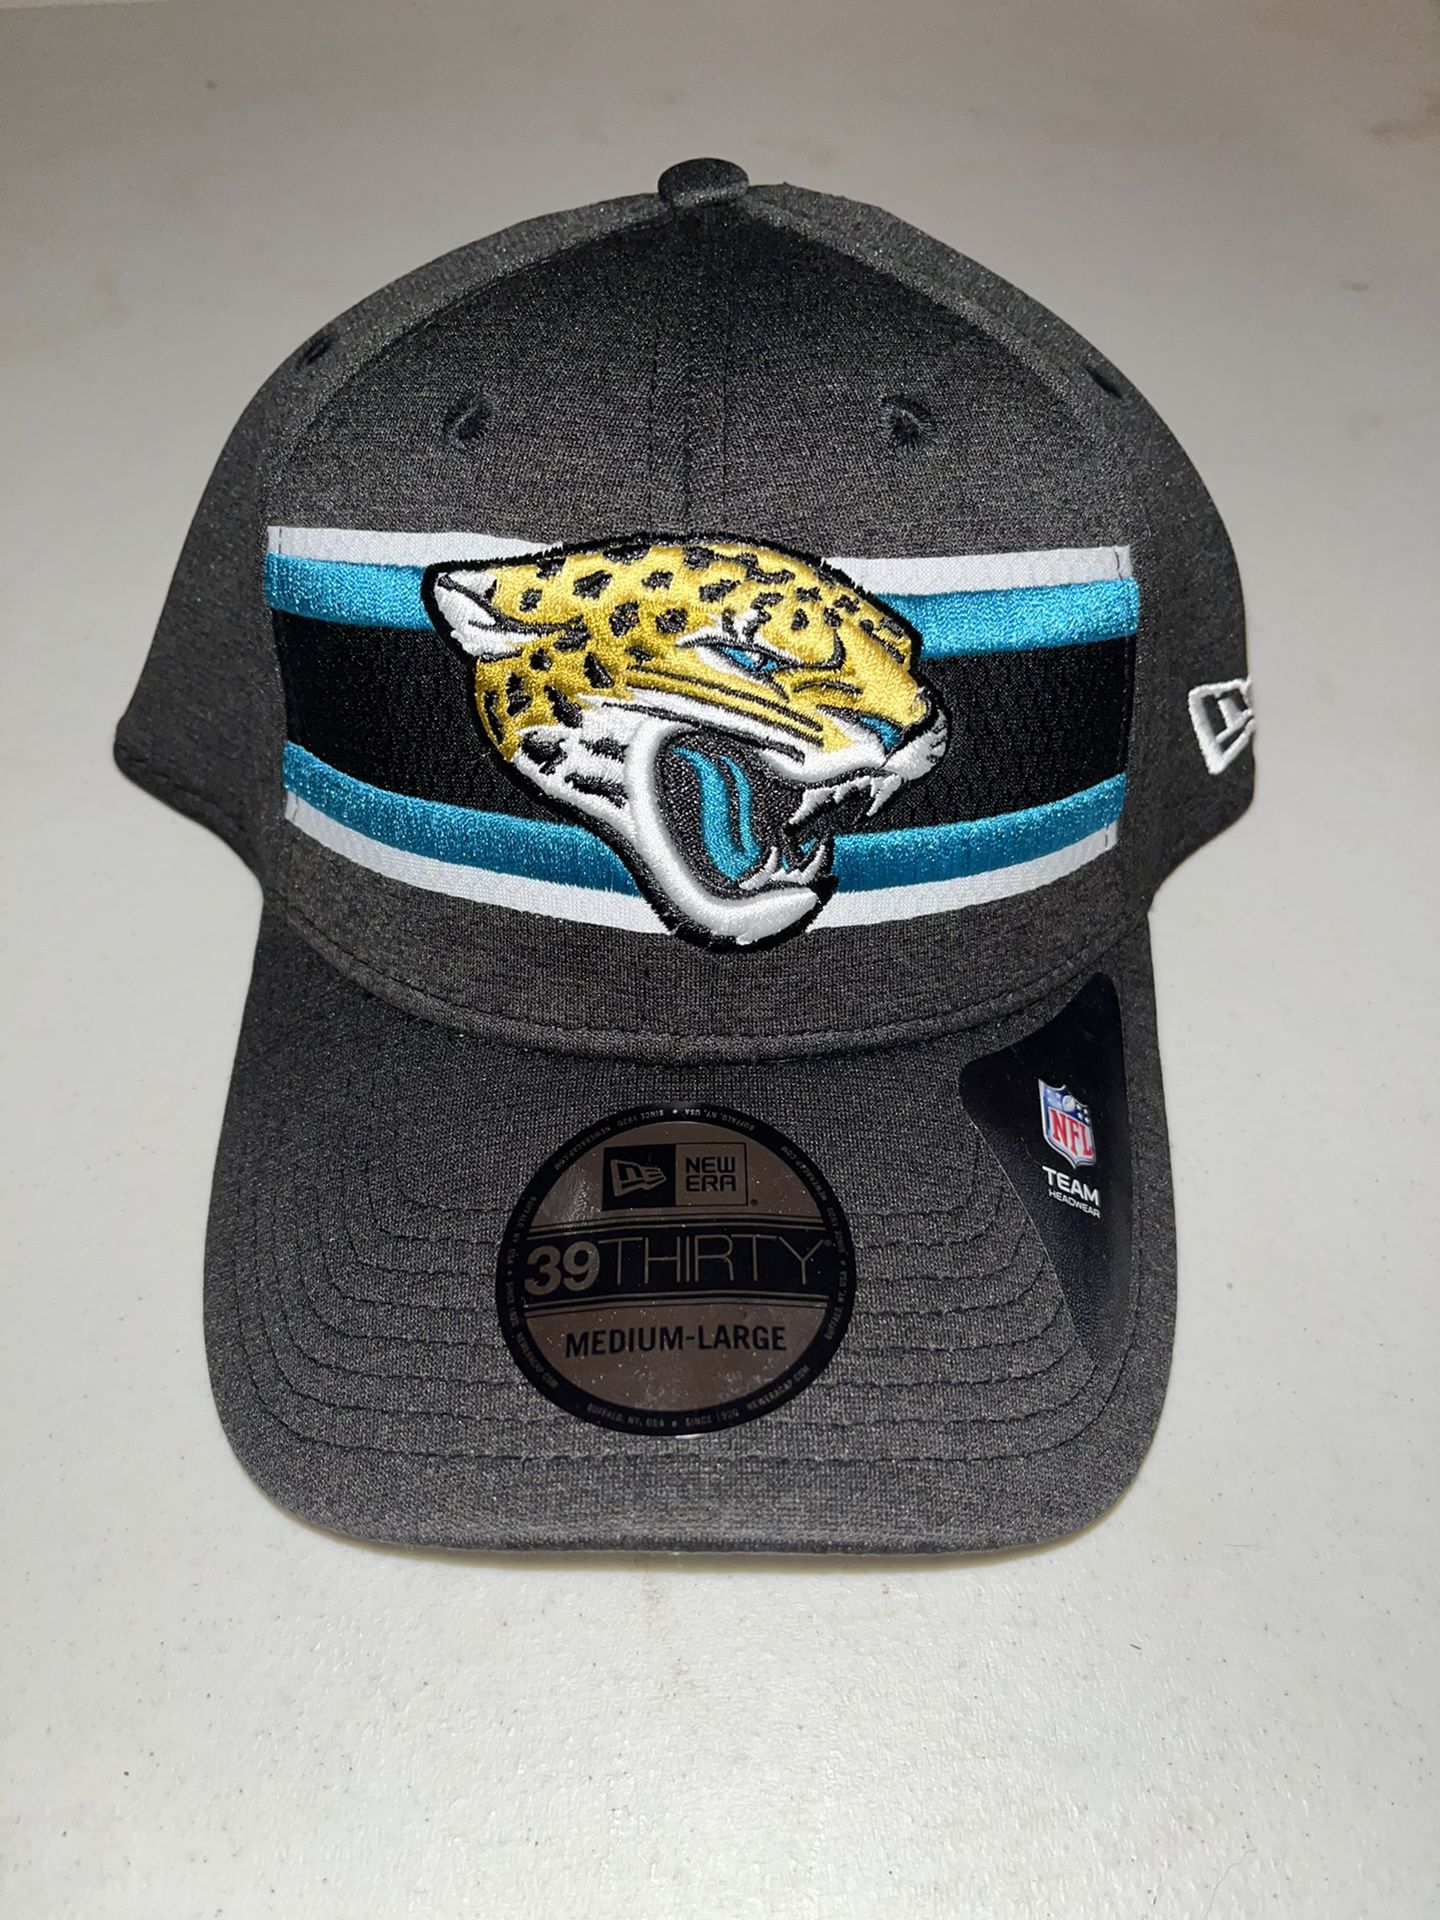 Brand new Jaguars hat